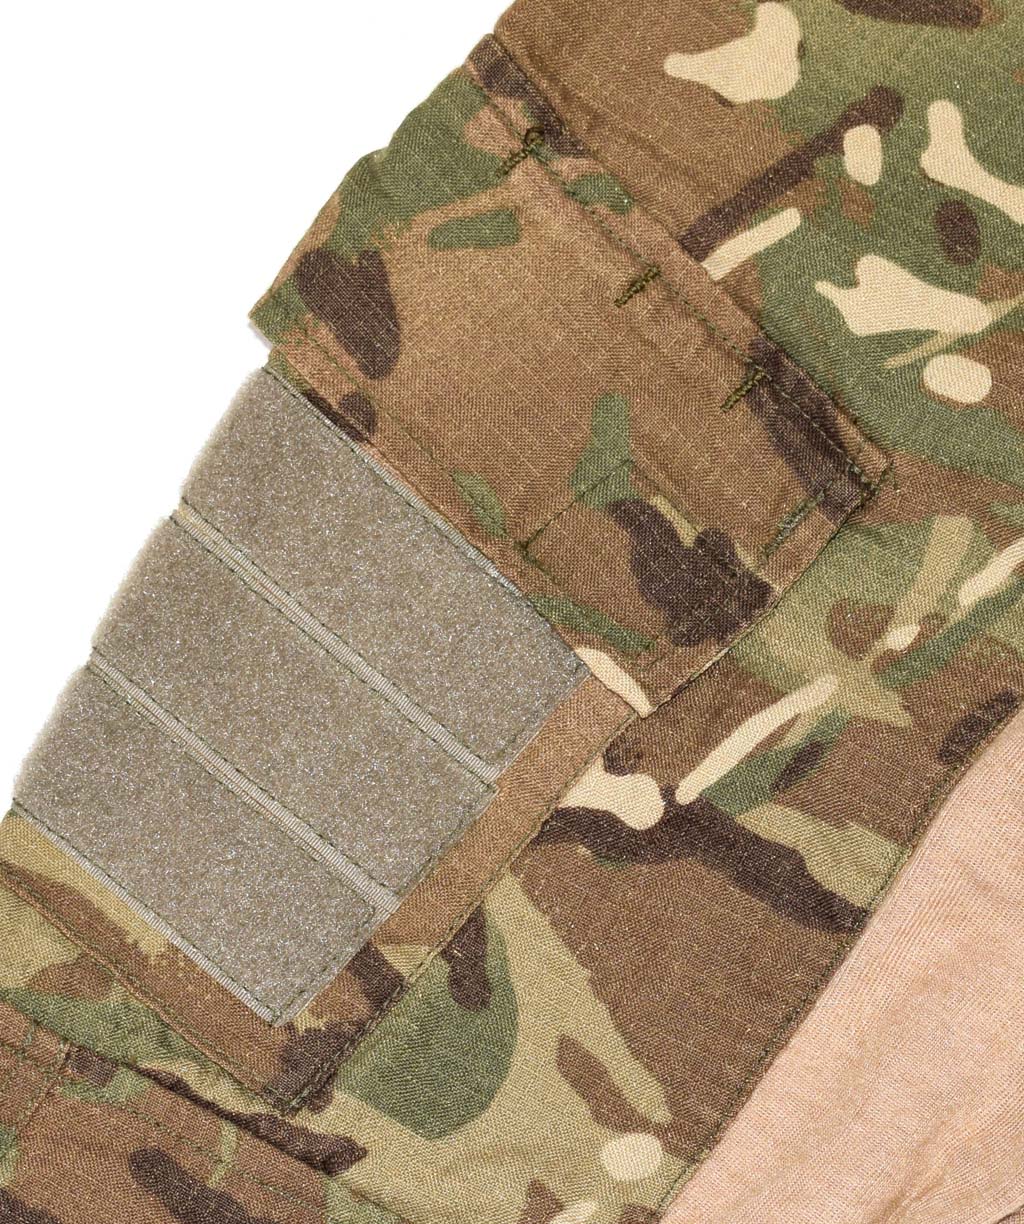 Рубашка Combat Shirt FR с защитой mtp/coyote б/у Англия